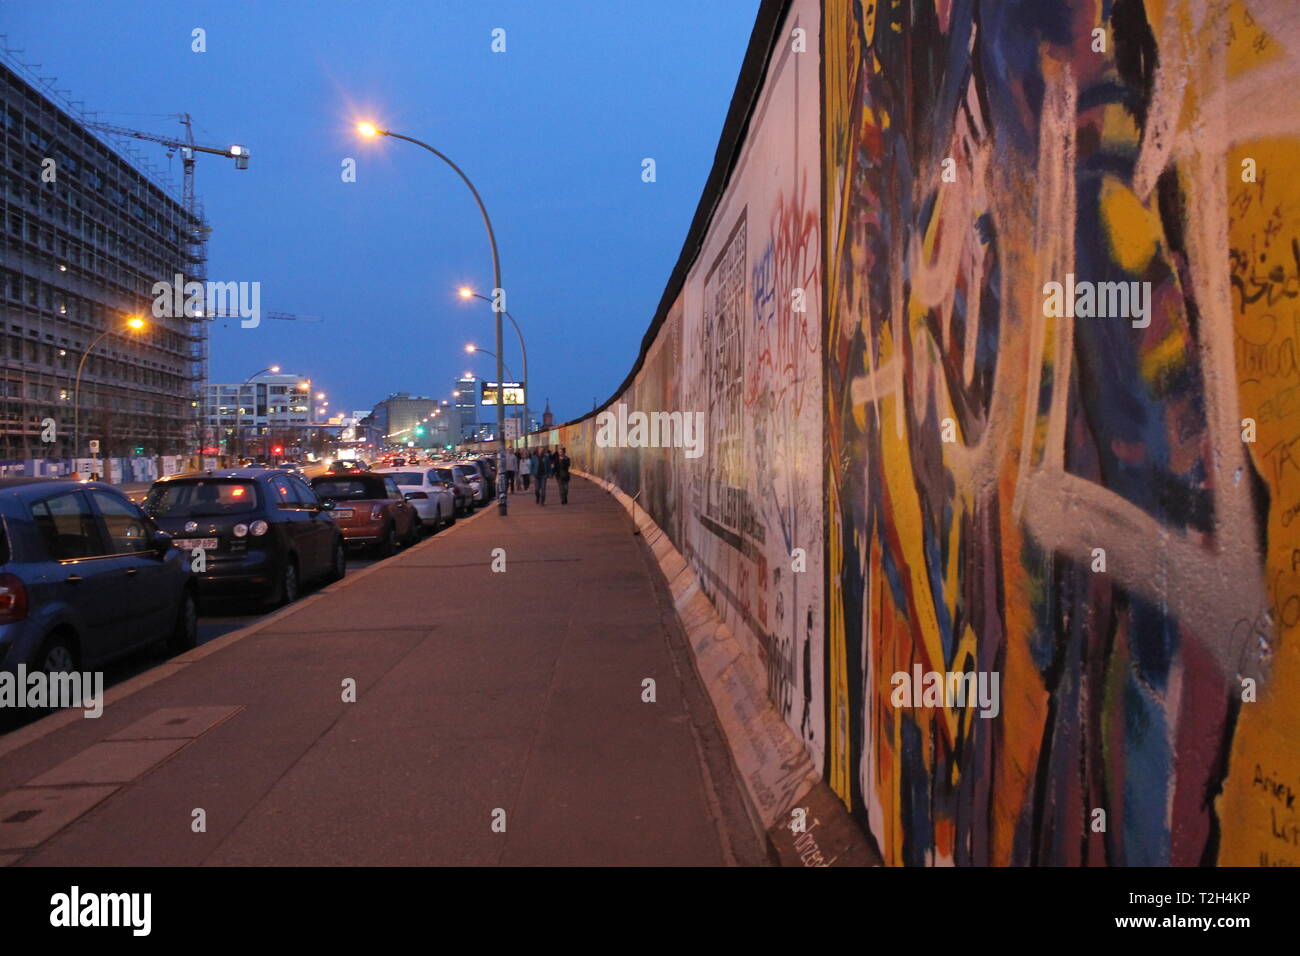 Berlin wall Stock Photo